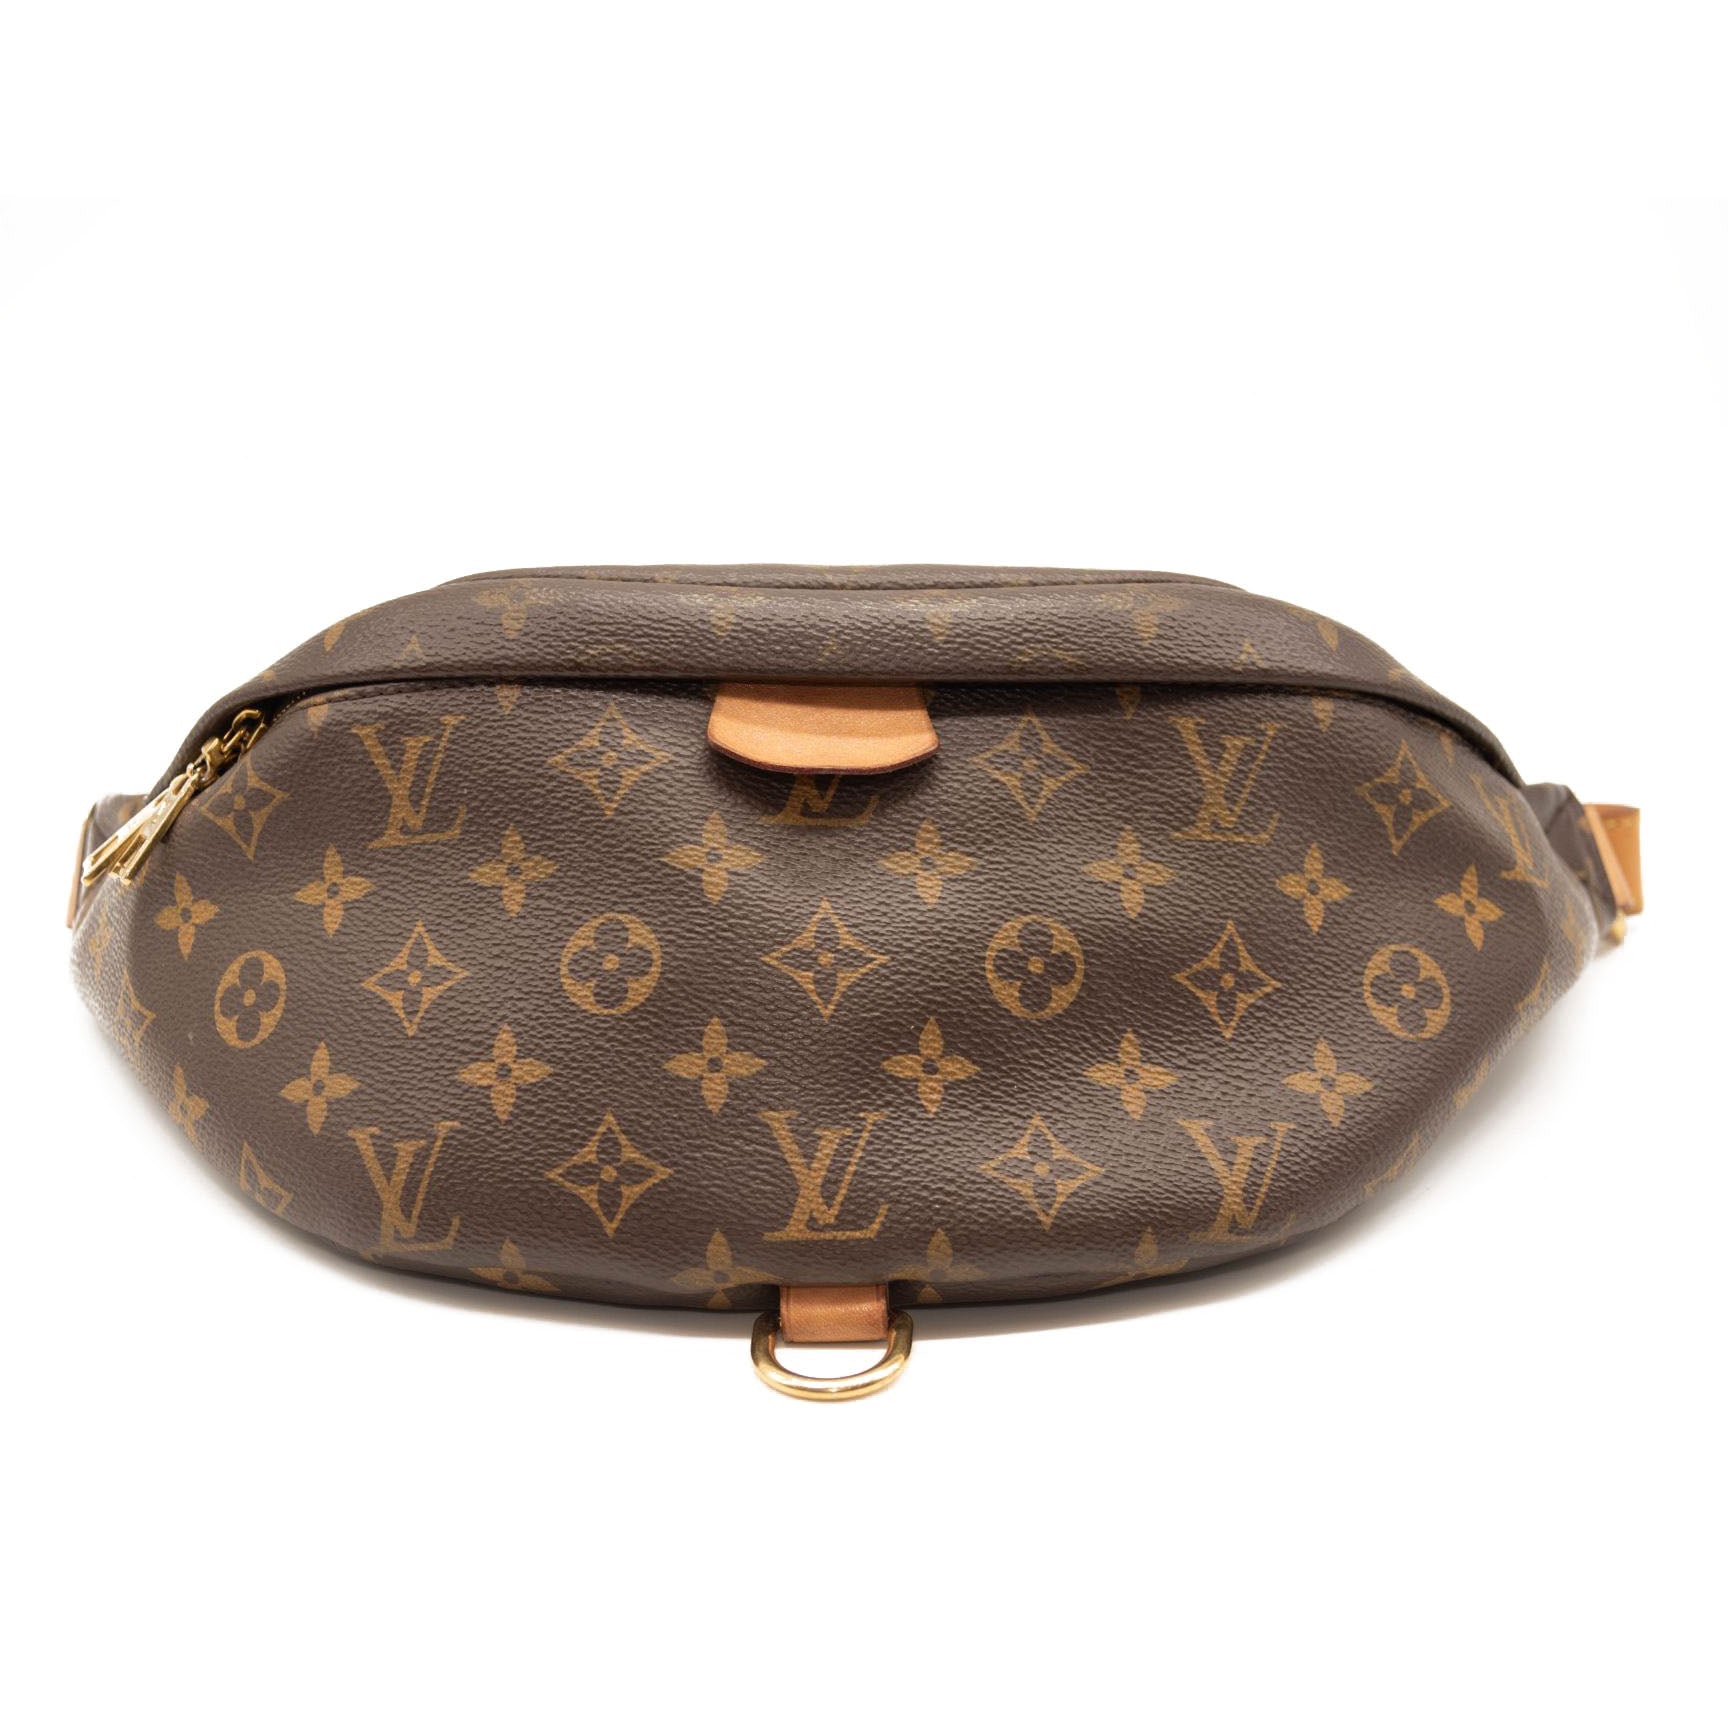 Louis Vuitton Bum Bag Black Interior Belt Bag Brown Canvas